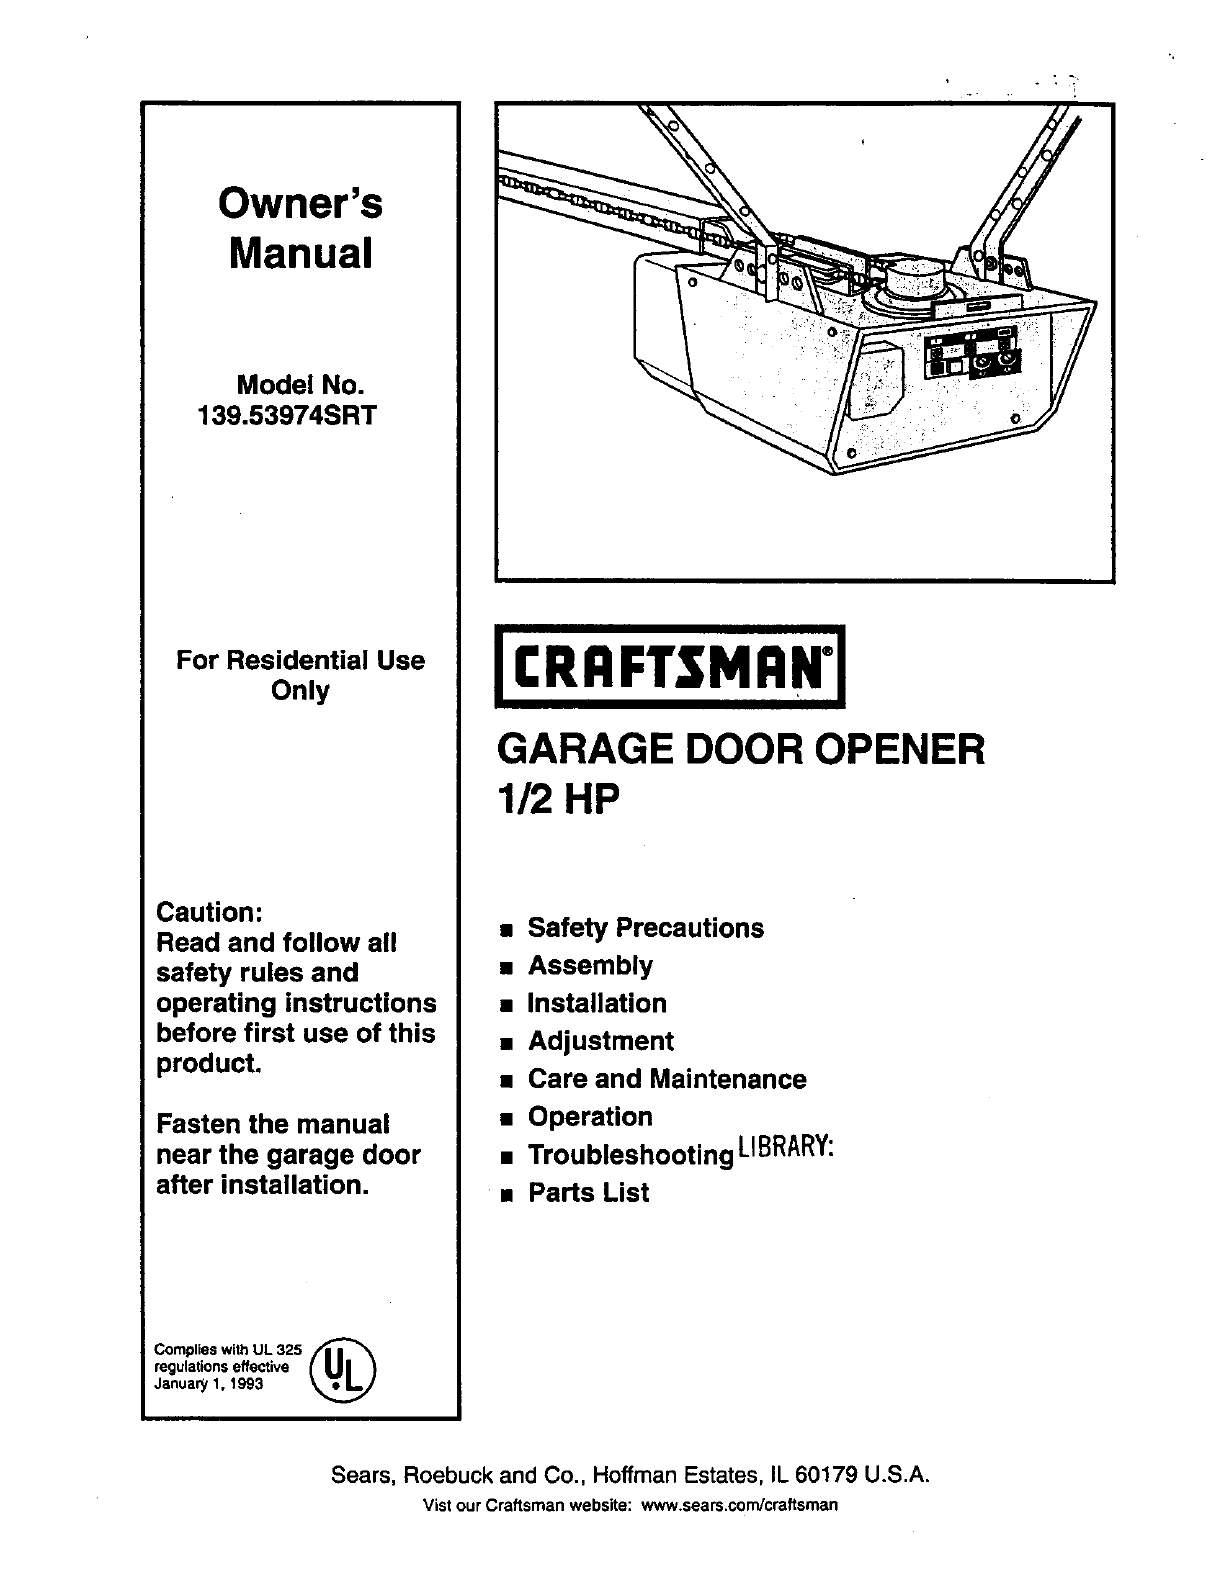 chamberlain liftmaster professional 1 2 hp garage door opener manual